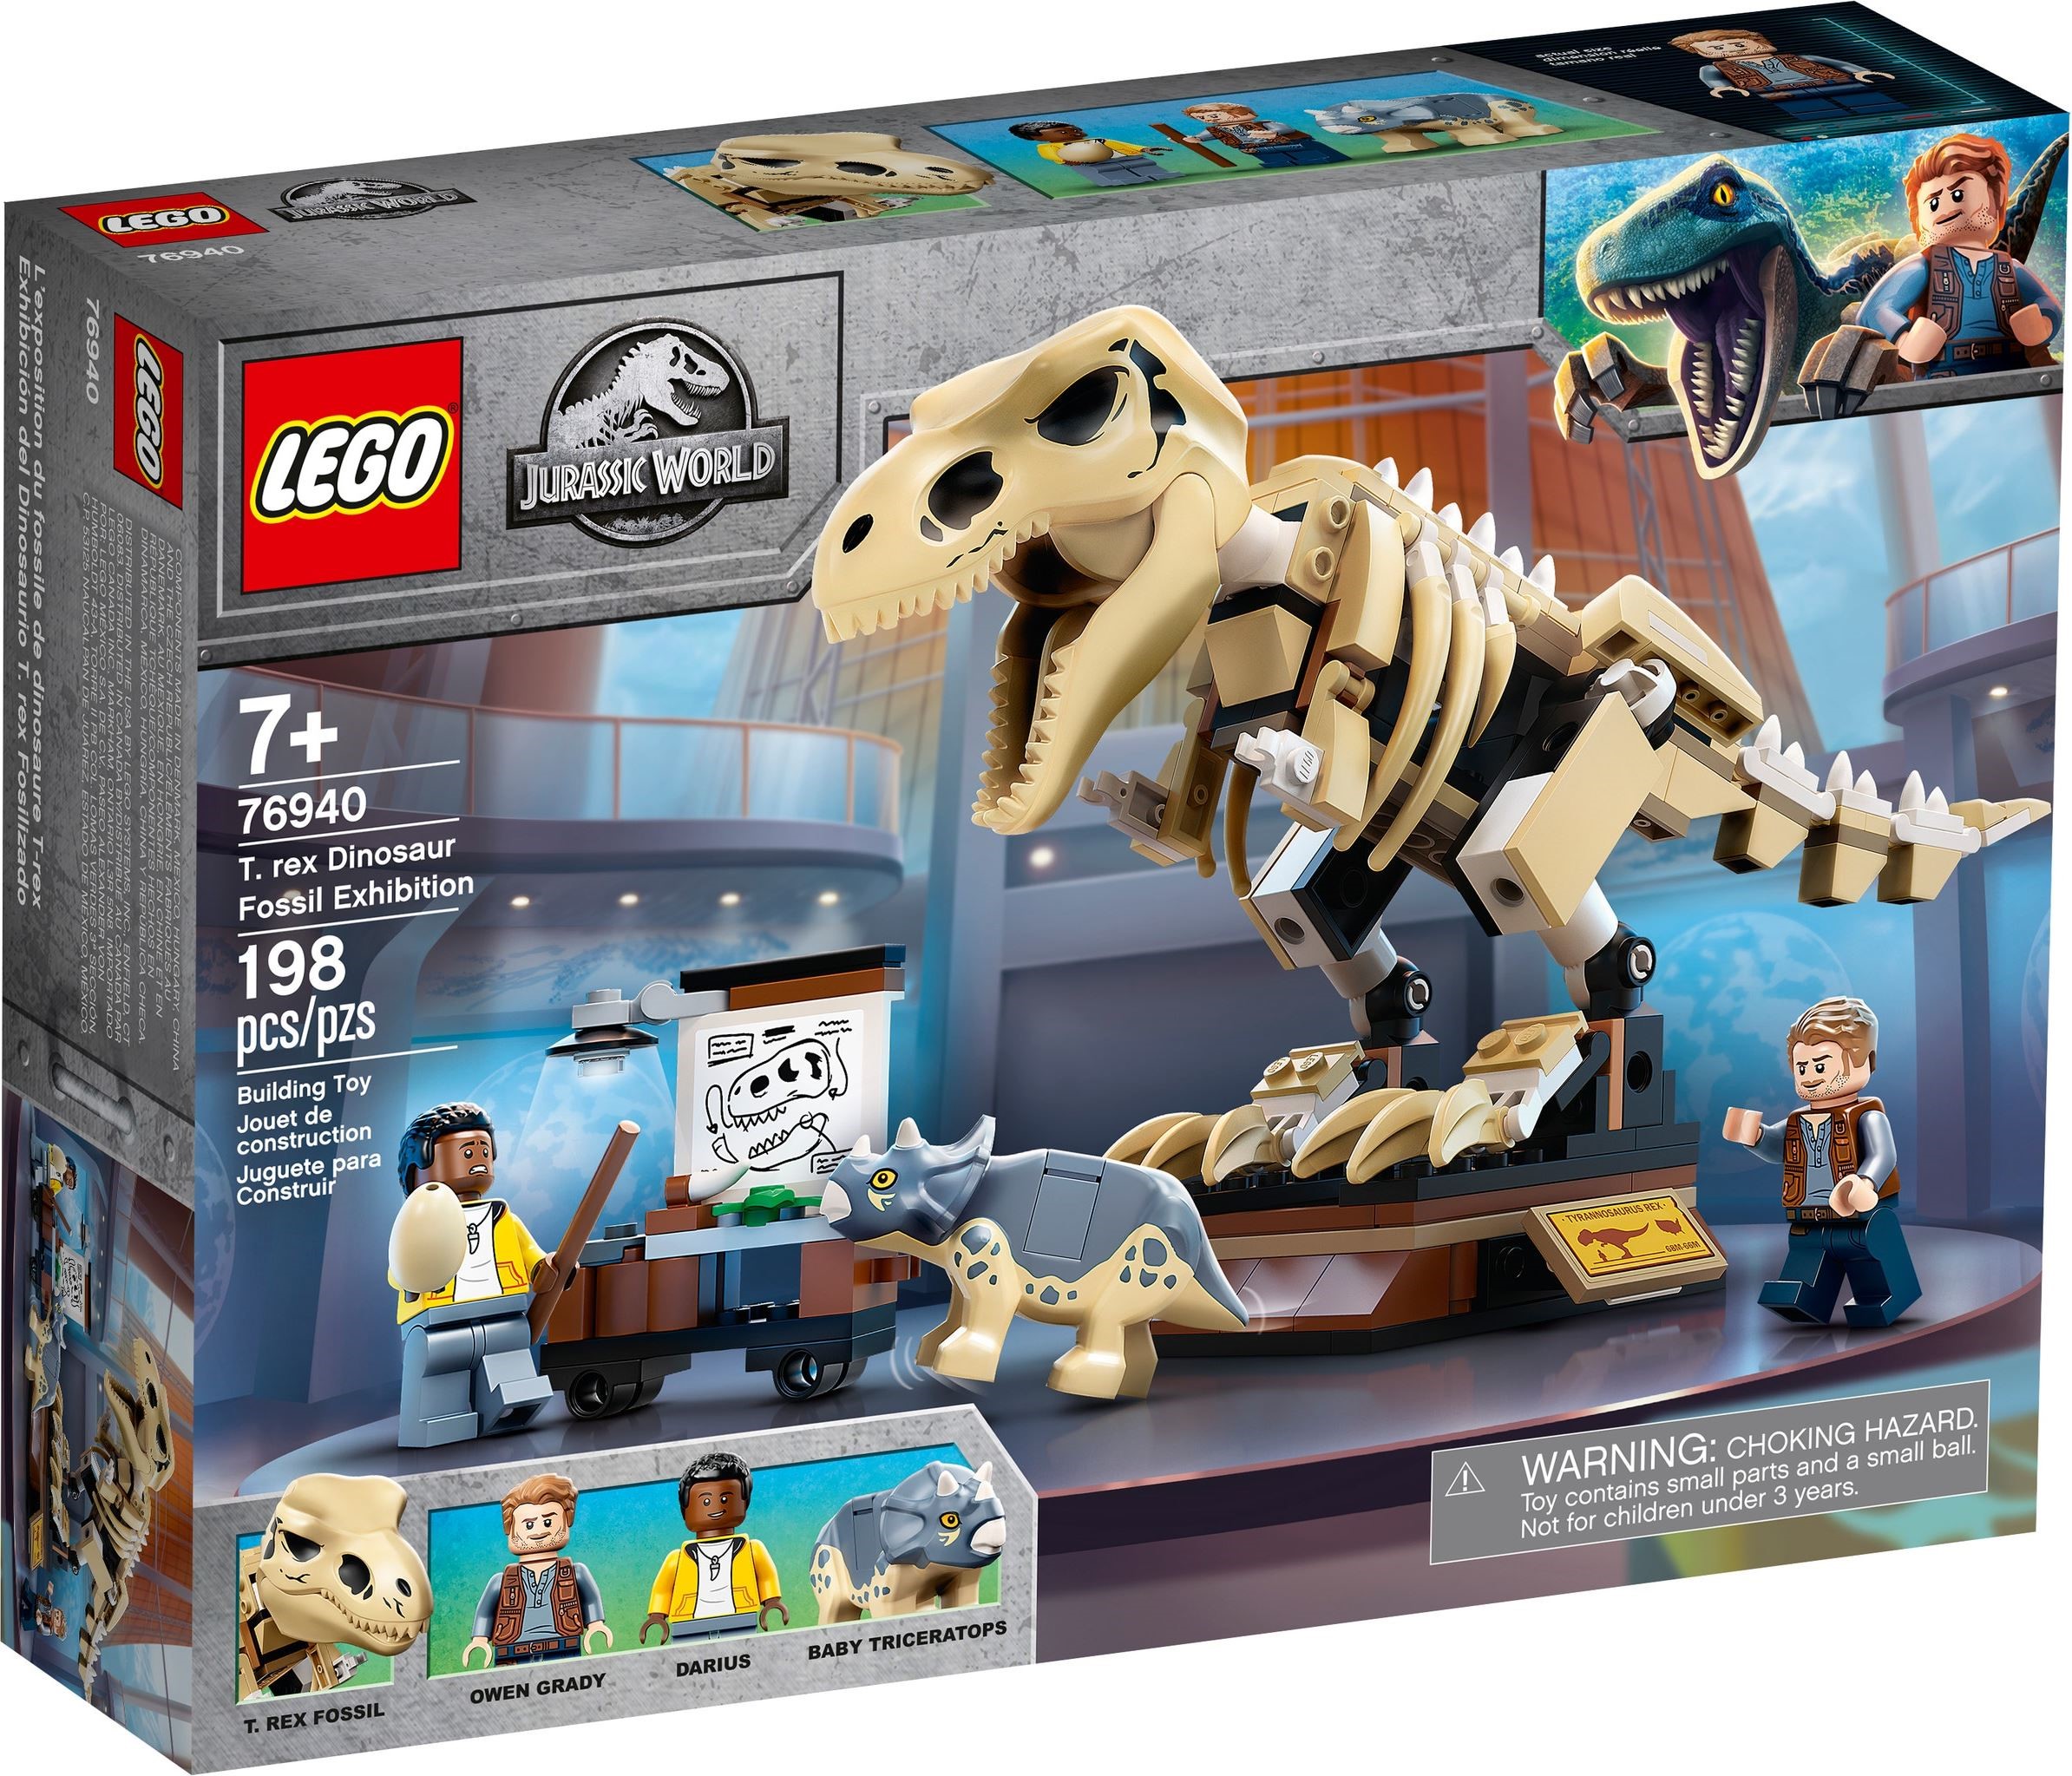 woonadres stikstof typist LEGO Jurassic World 2021 Sets Revealed - The Brick Fan